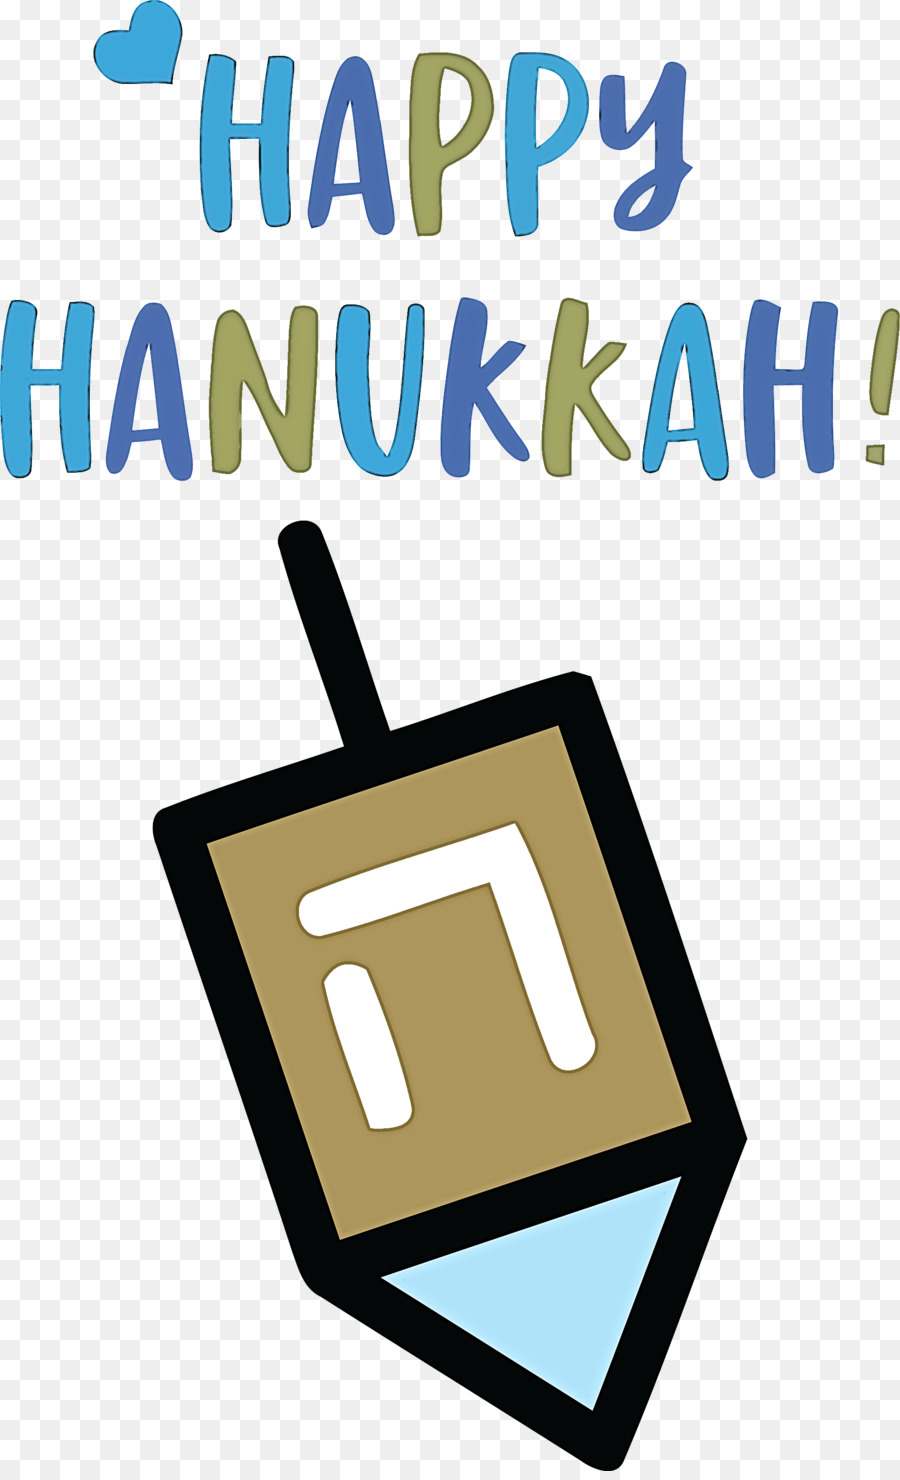 Happy Hanukkah Hanukkah Jüdisches Festival - 